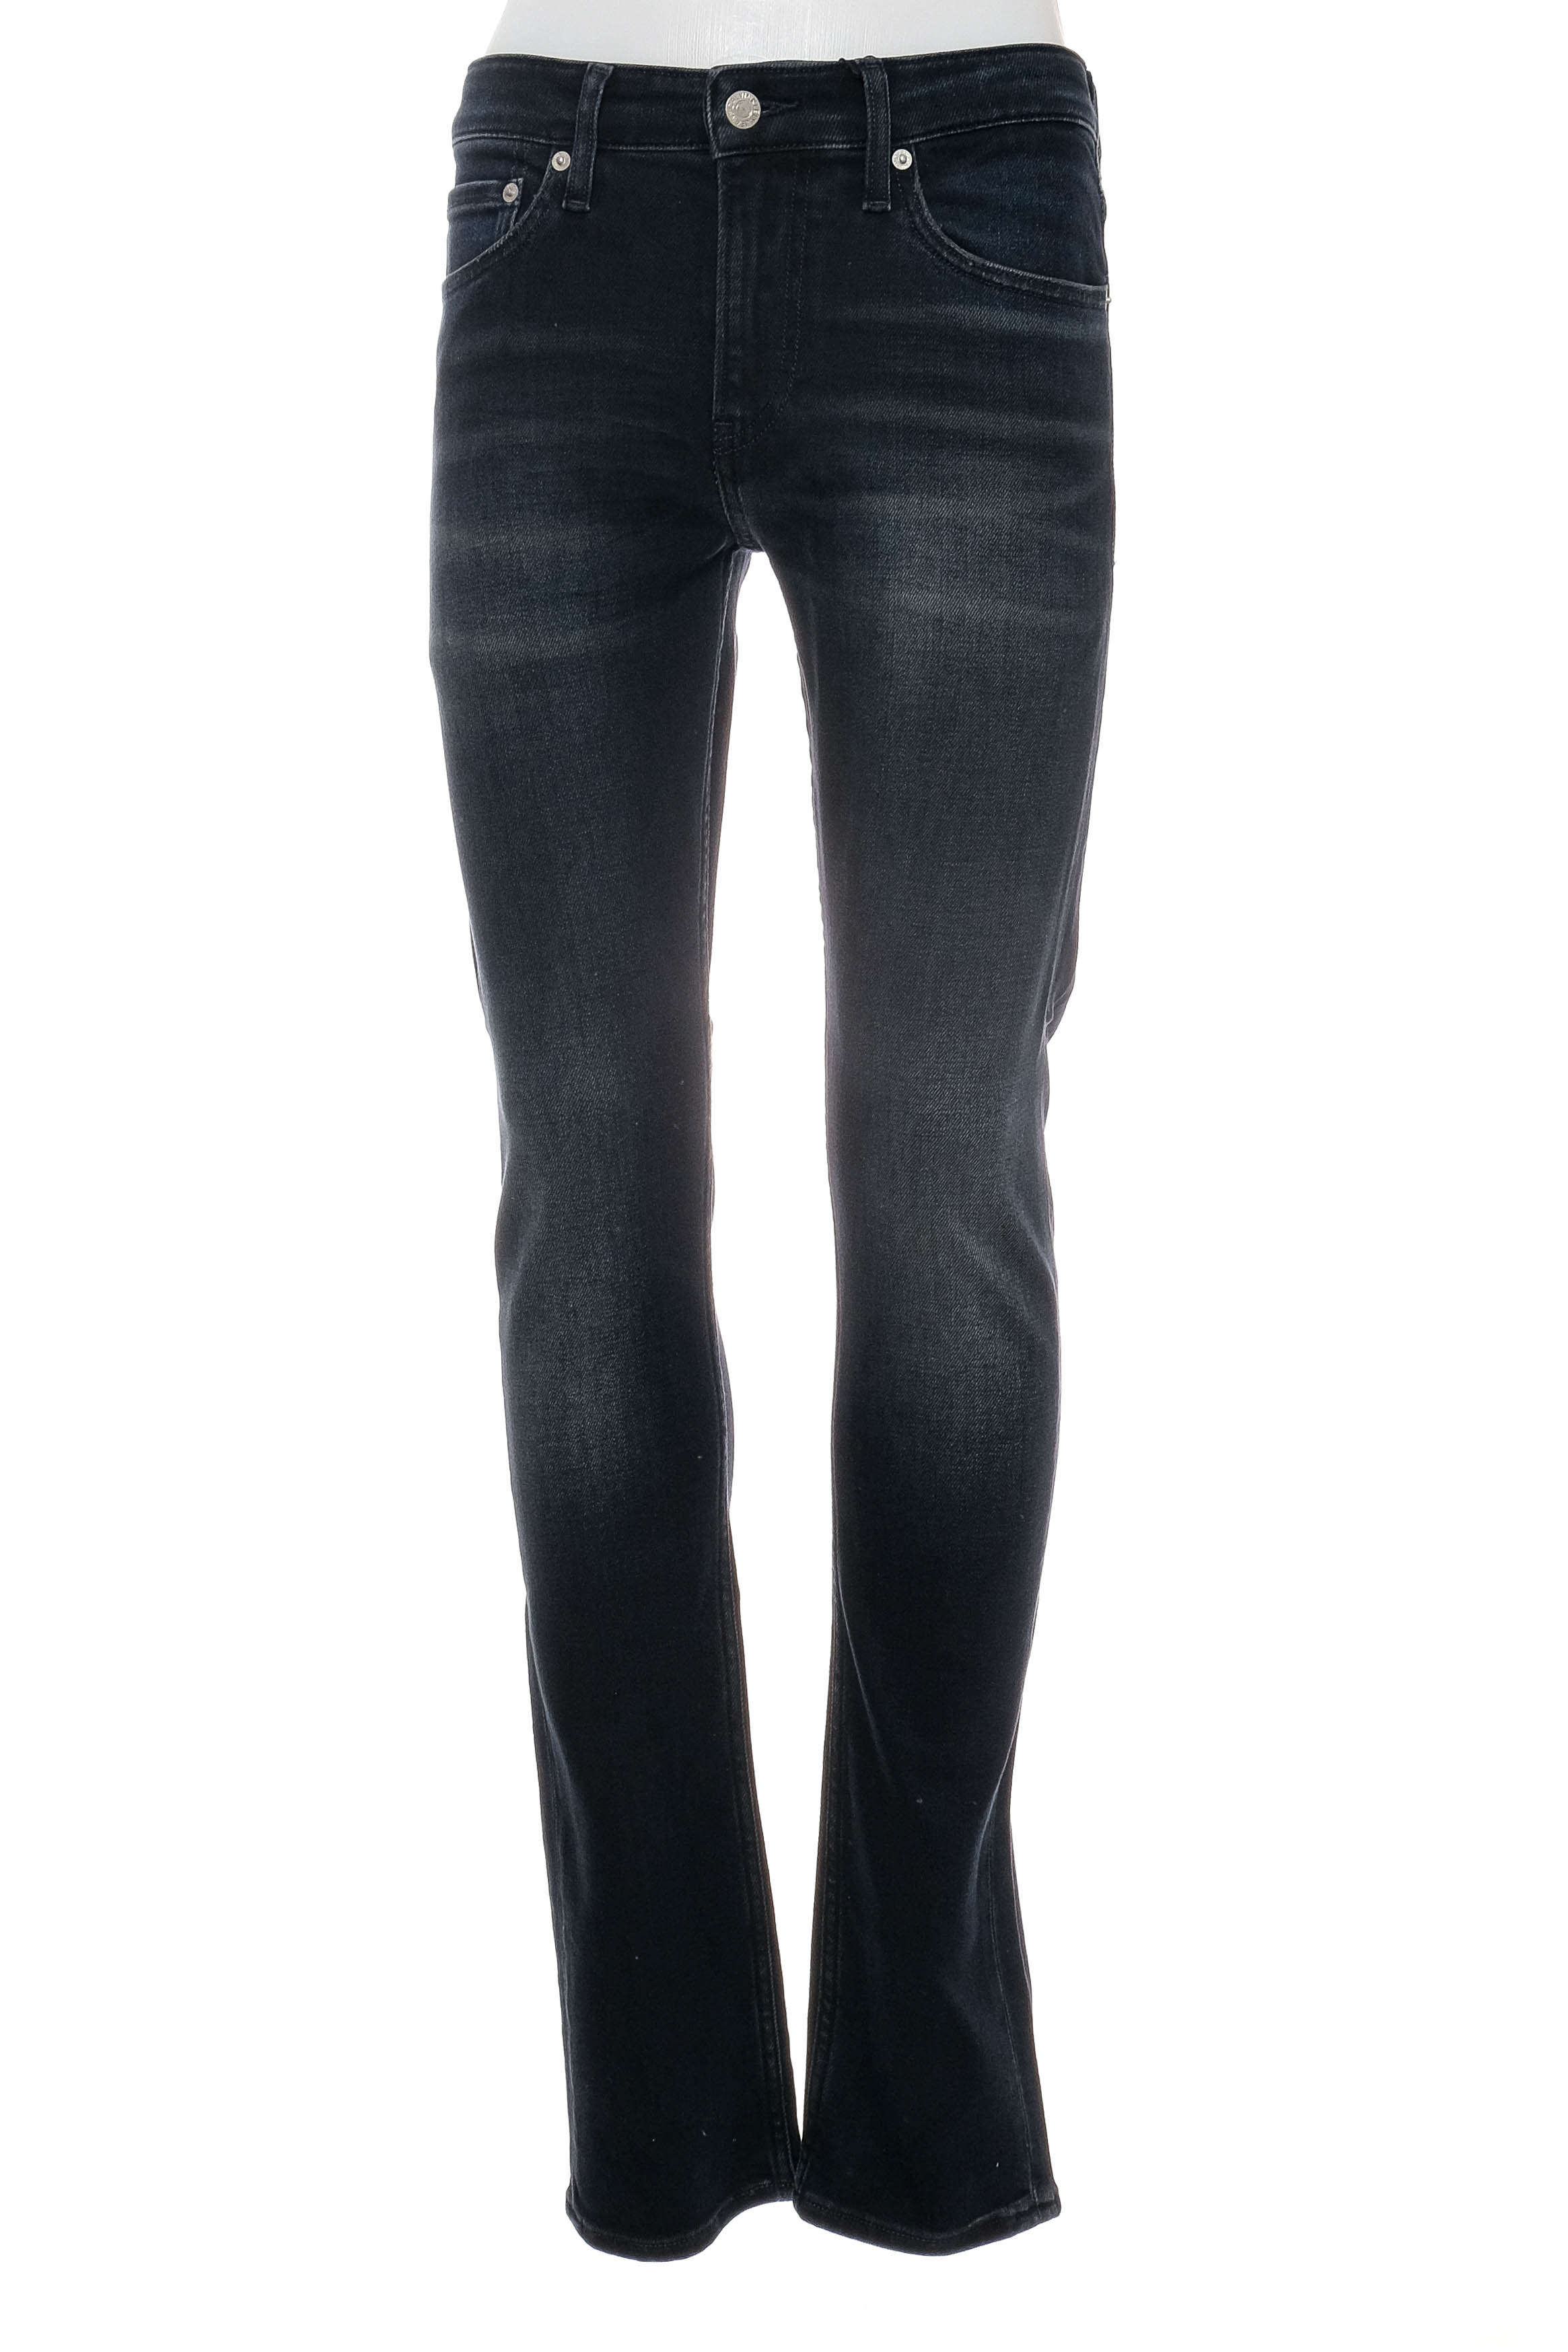 Men's jeans - Calvin Klein Jeans - 0